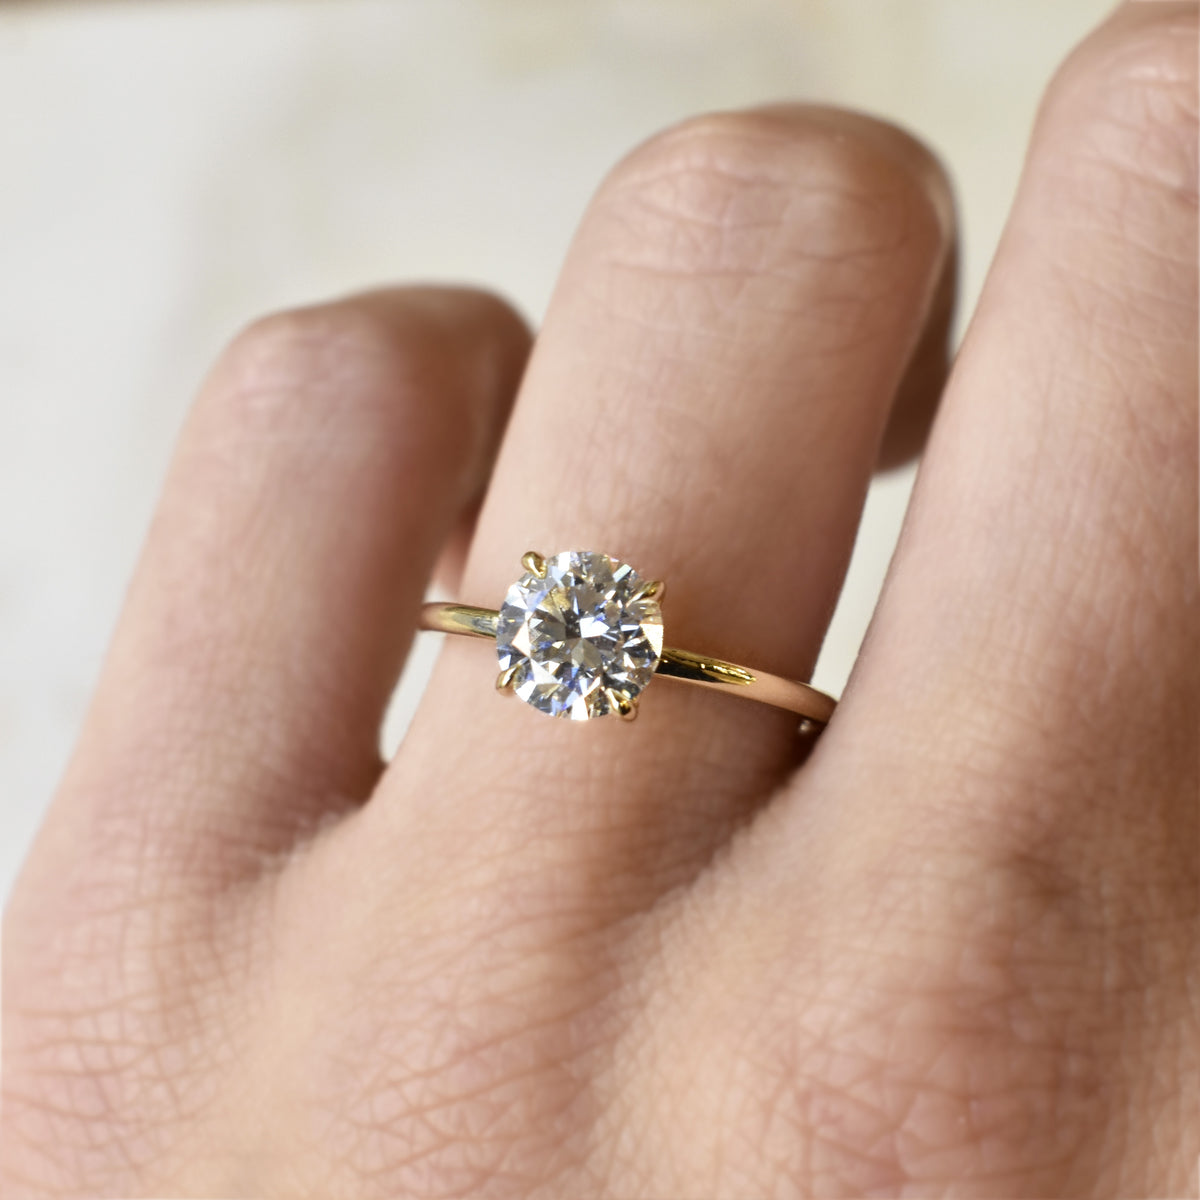 Ridged 18 KT Single Stone Diamond Engagement Ring